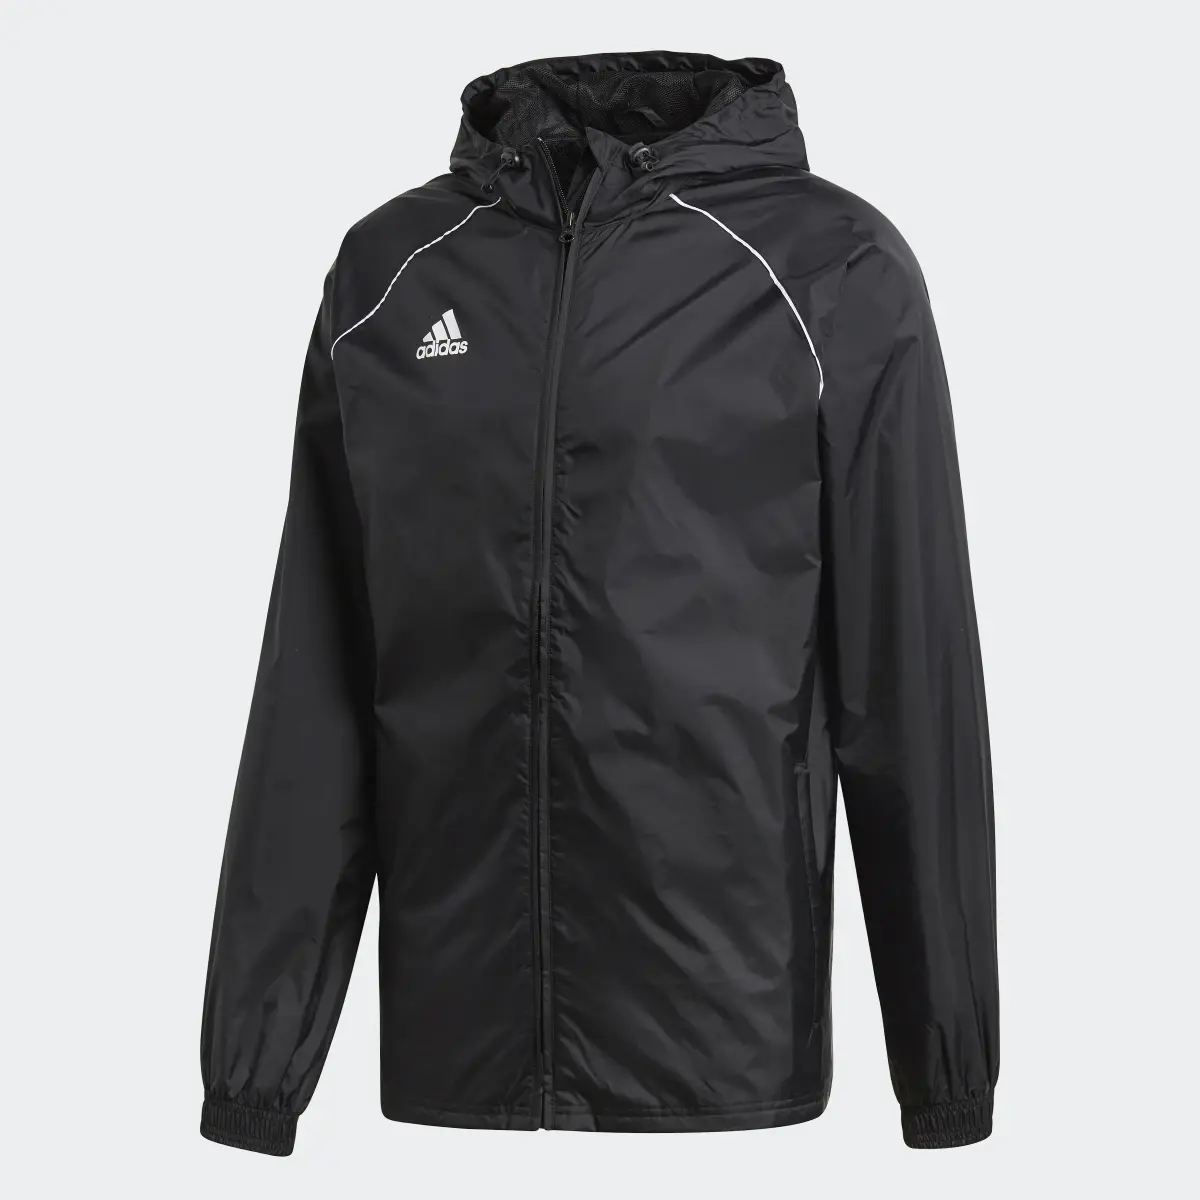 Adidas Core 18 Rain Jacket. 1